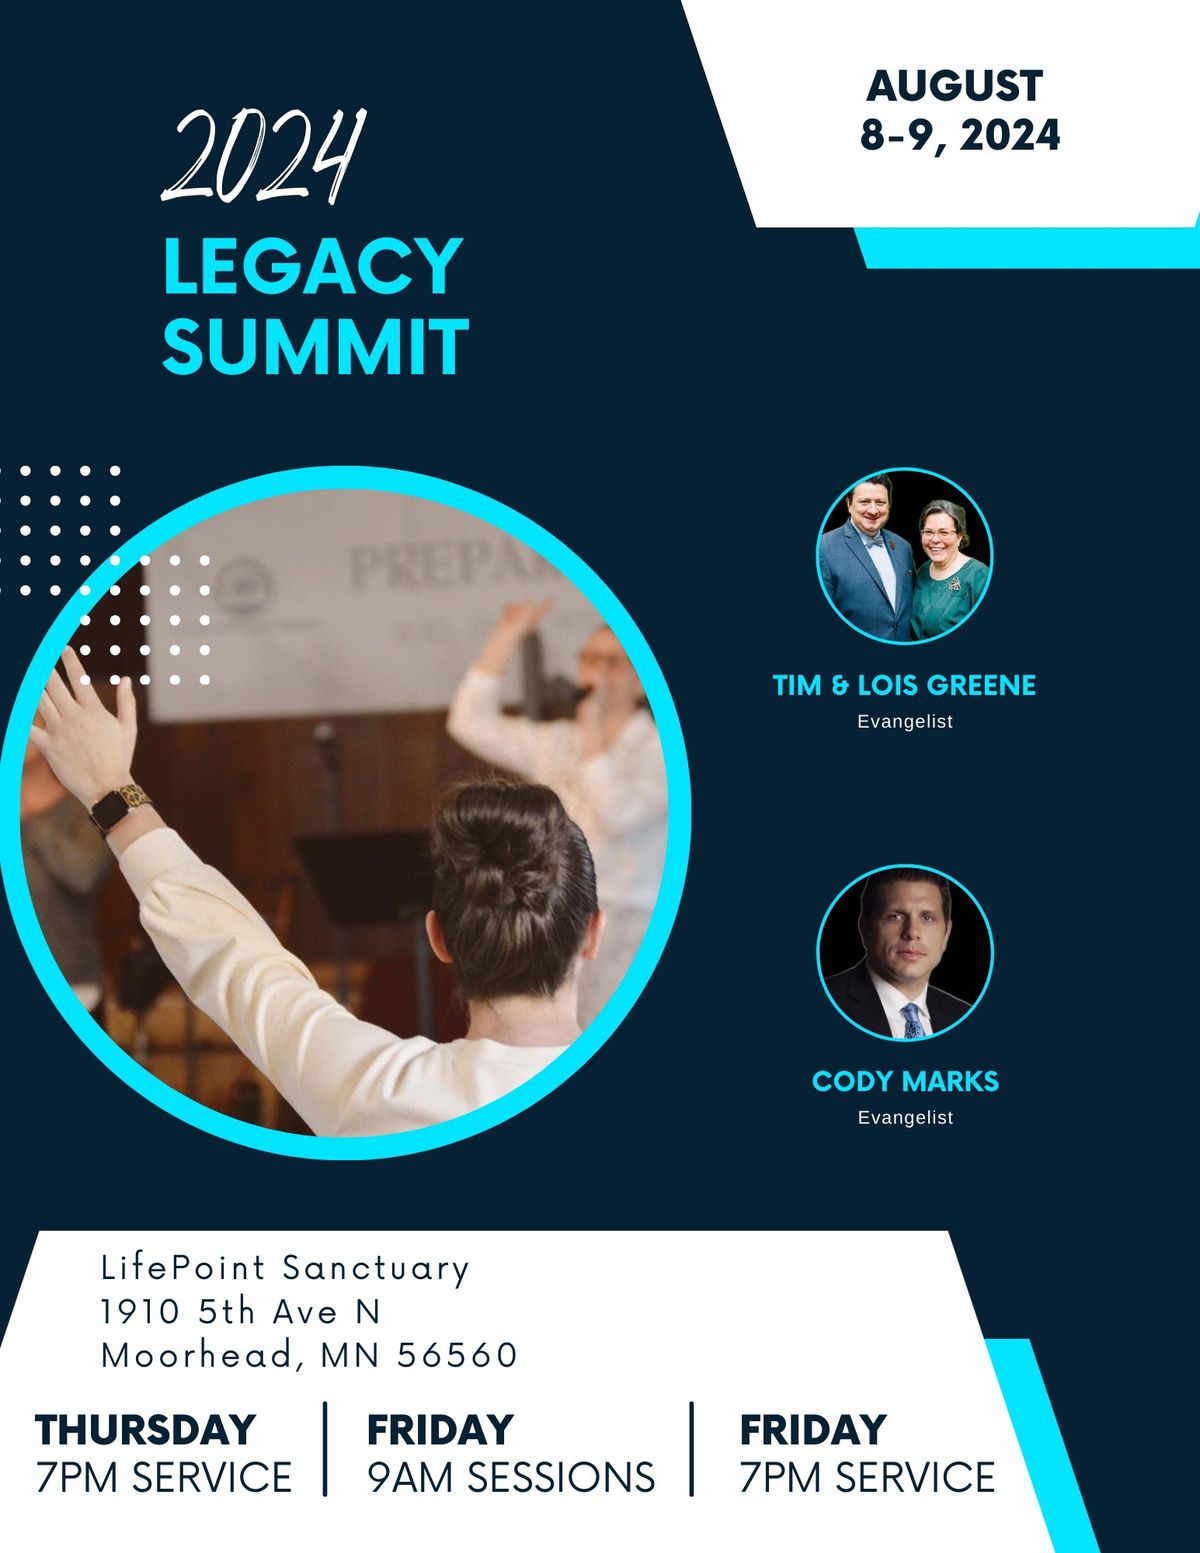 The Legacy Summit 